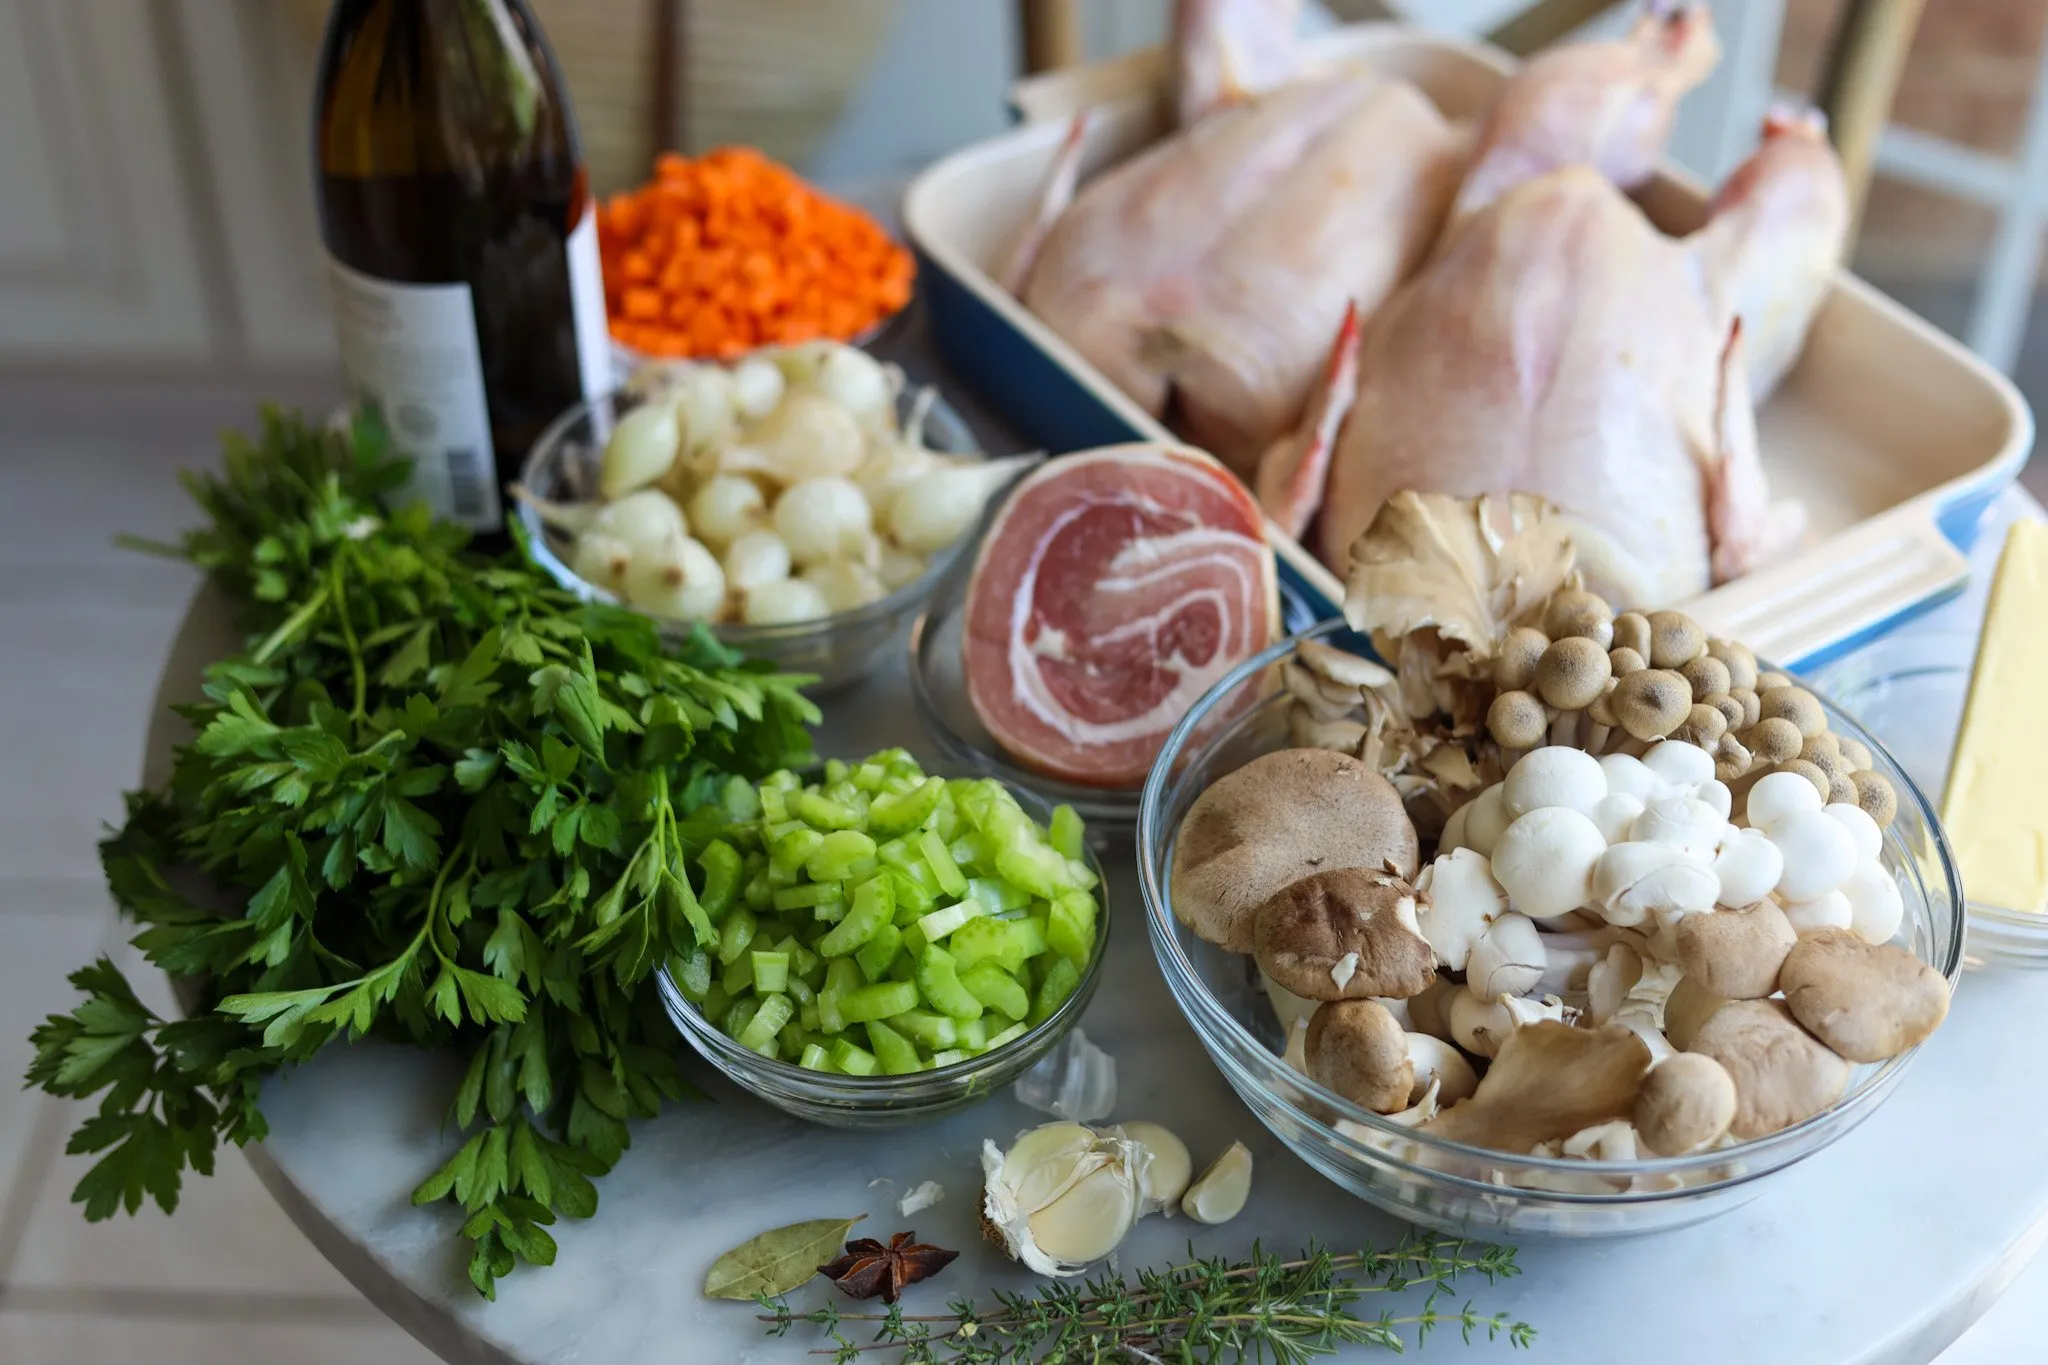 Ingredients for coq au vin blanc - chicken, white wine, pork belly, celery, onions, mushrooms, parsley